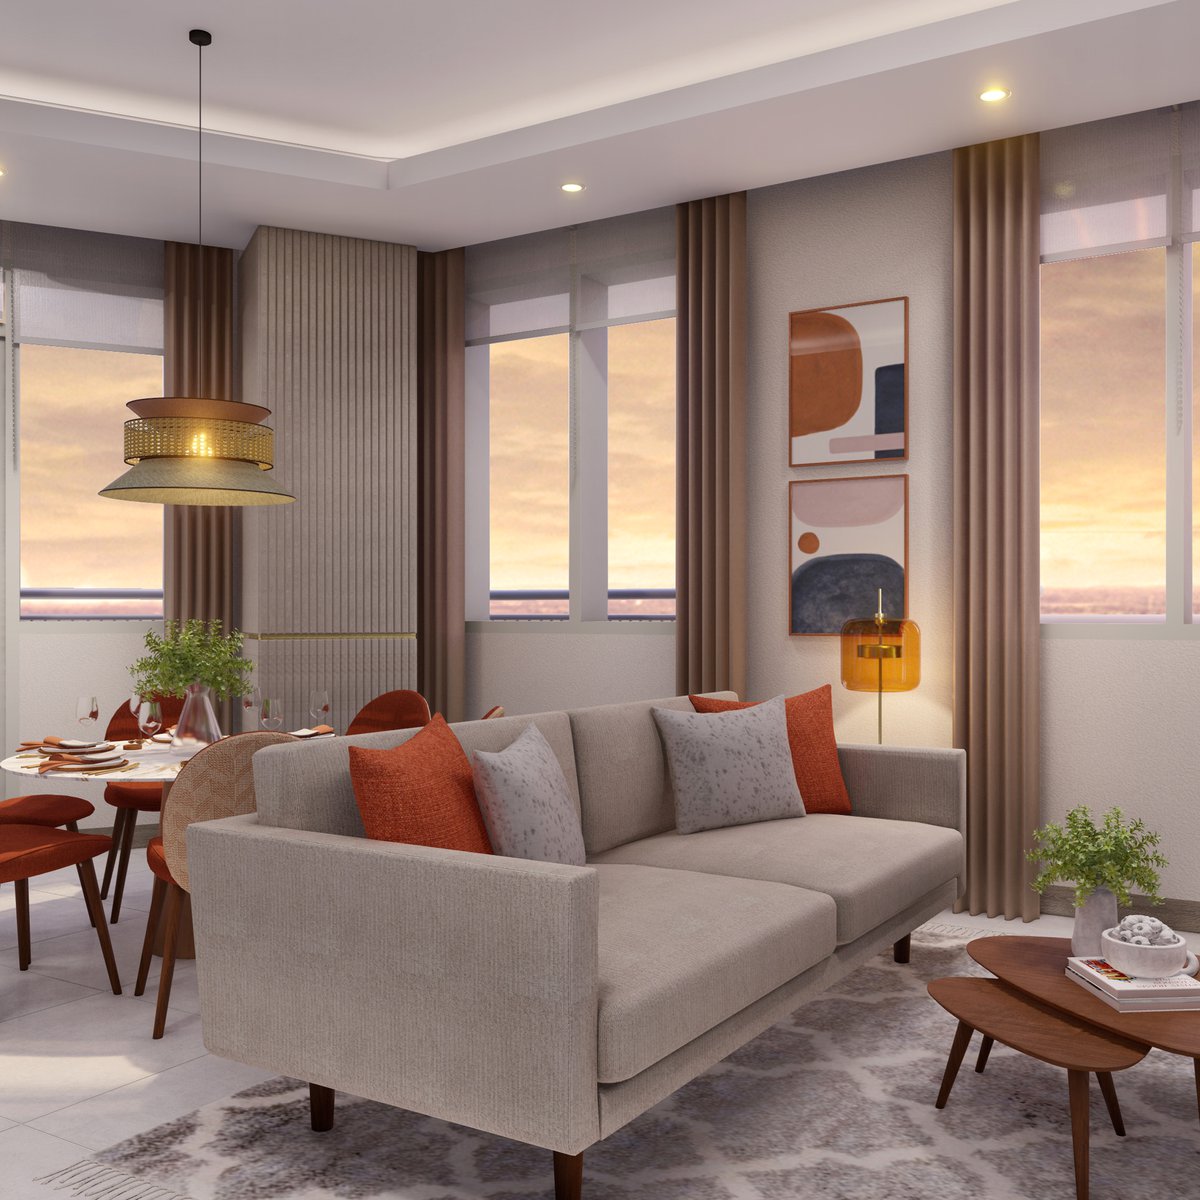 2-Bedroom Condominium with Balcony For Sale in Mactan Newtown Cebu